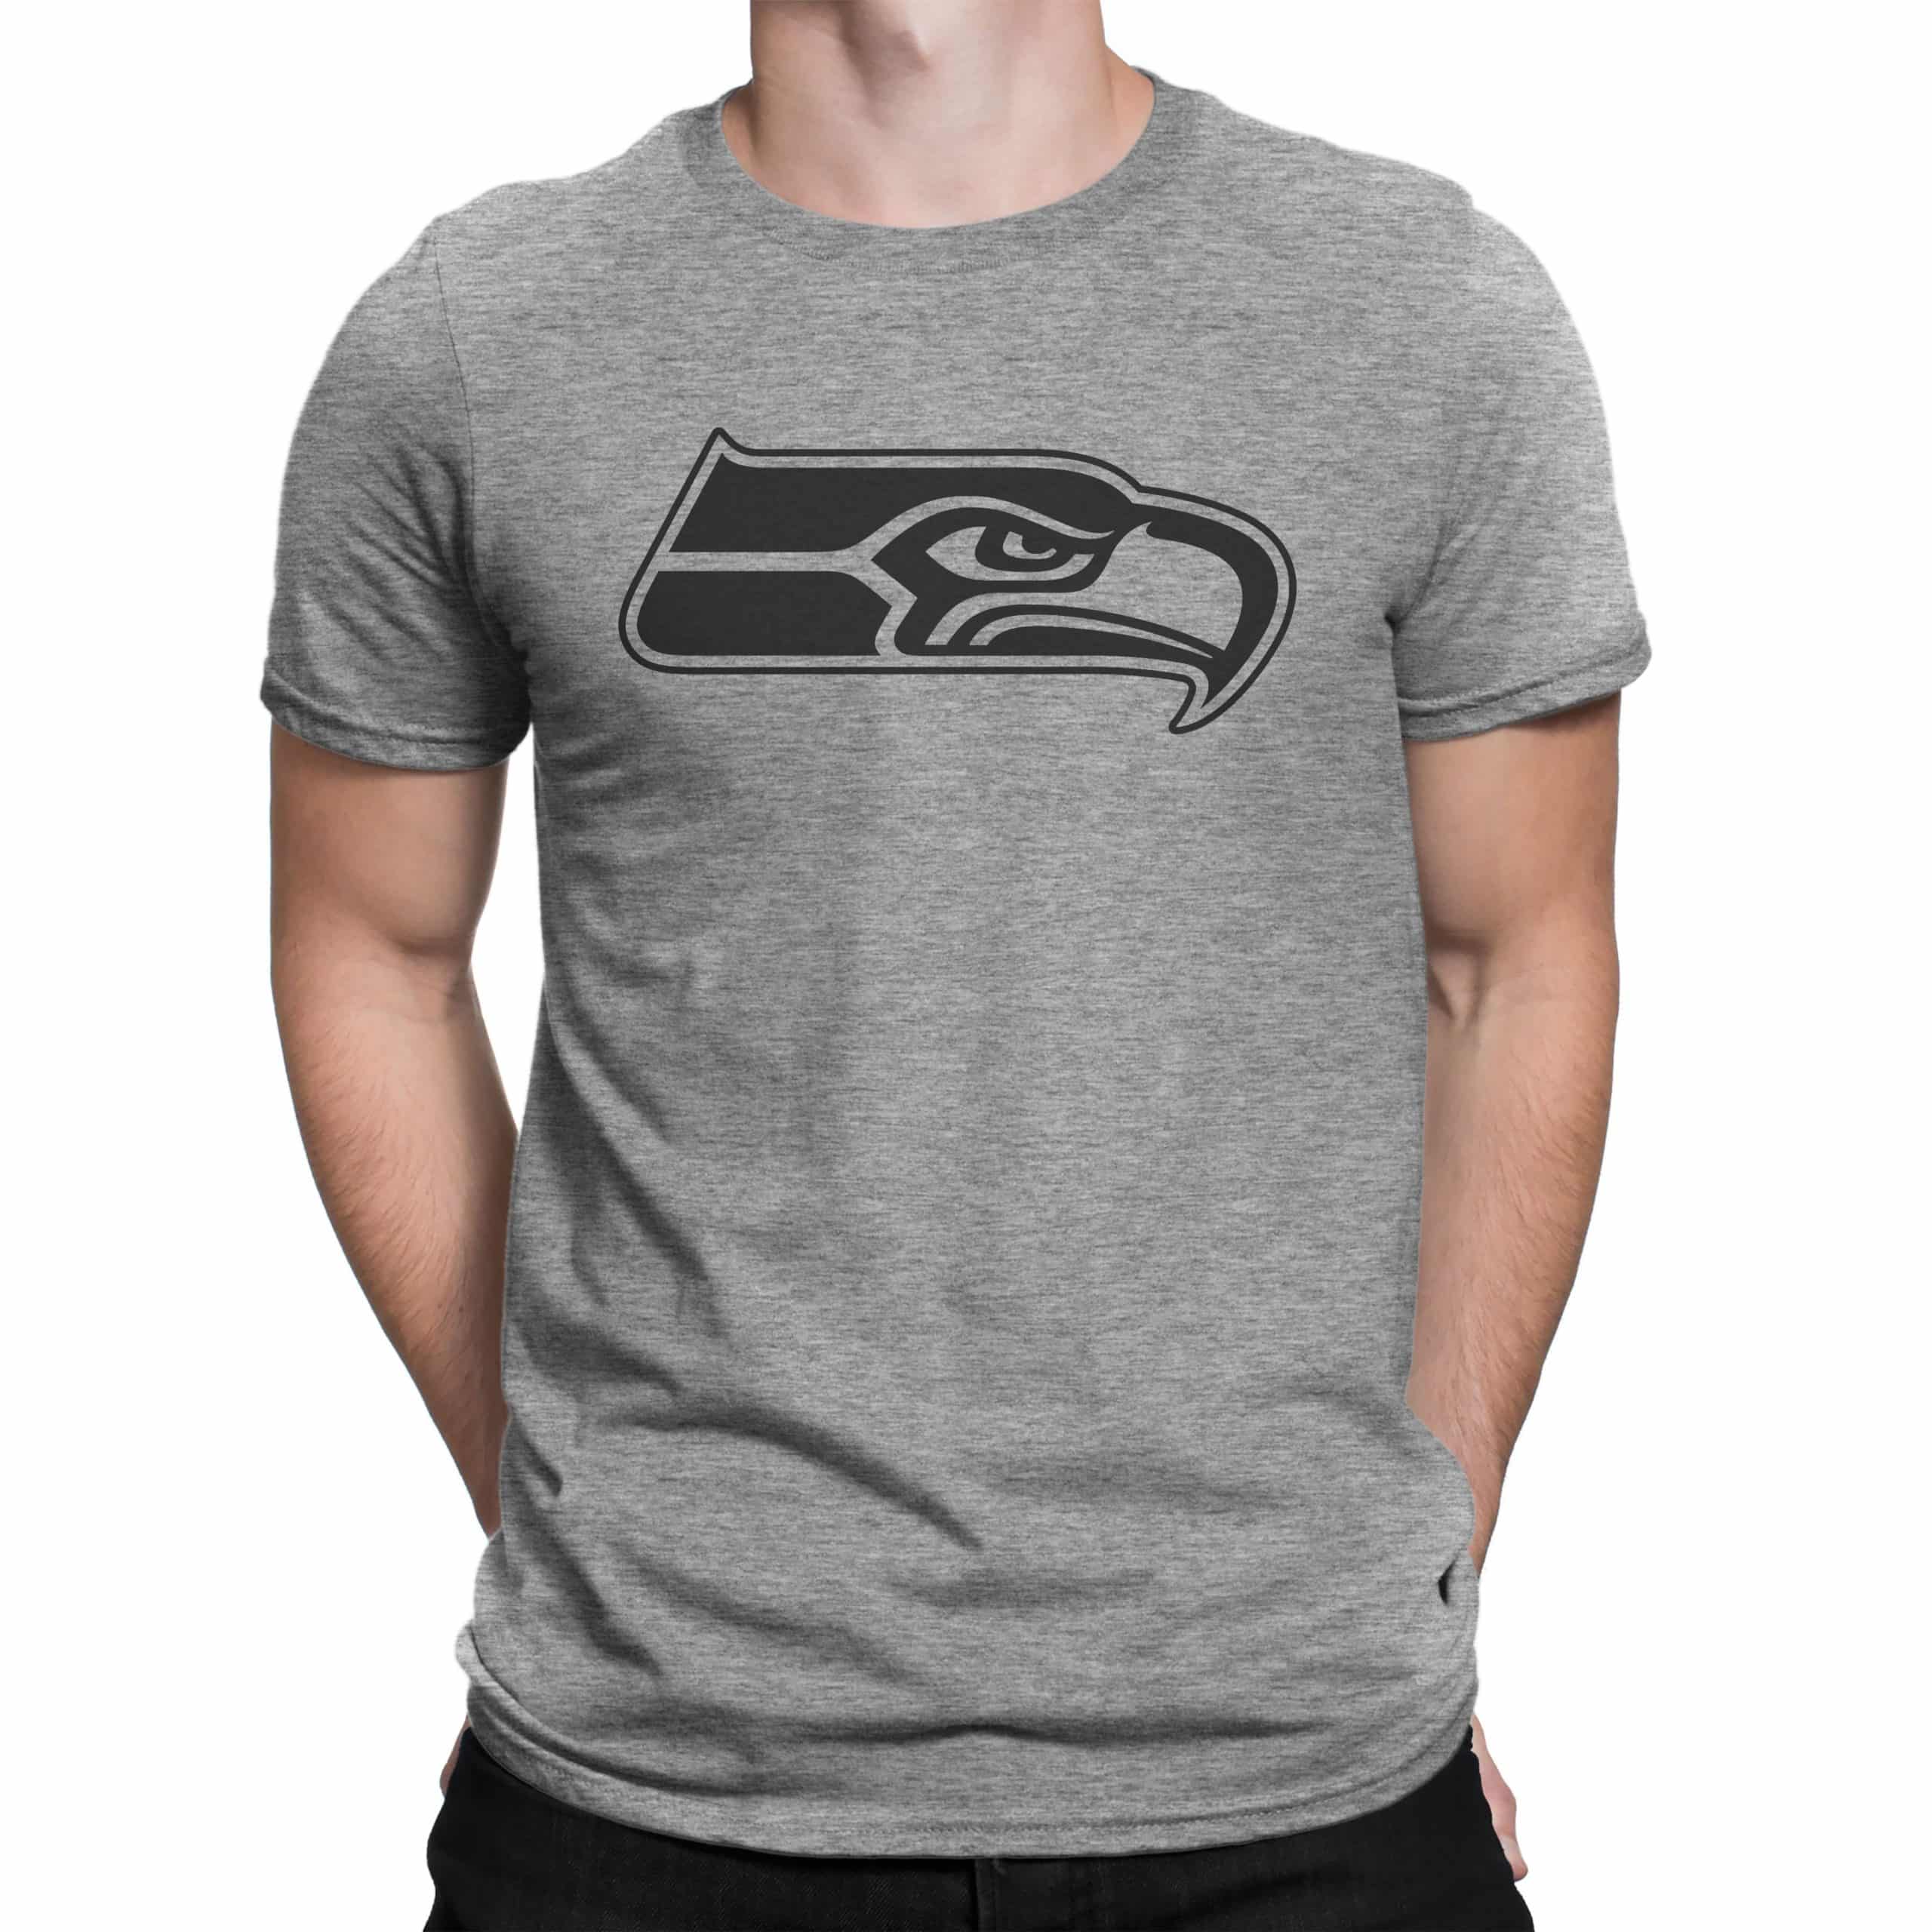 cool seahawks shirts